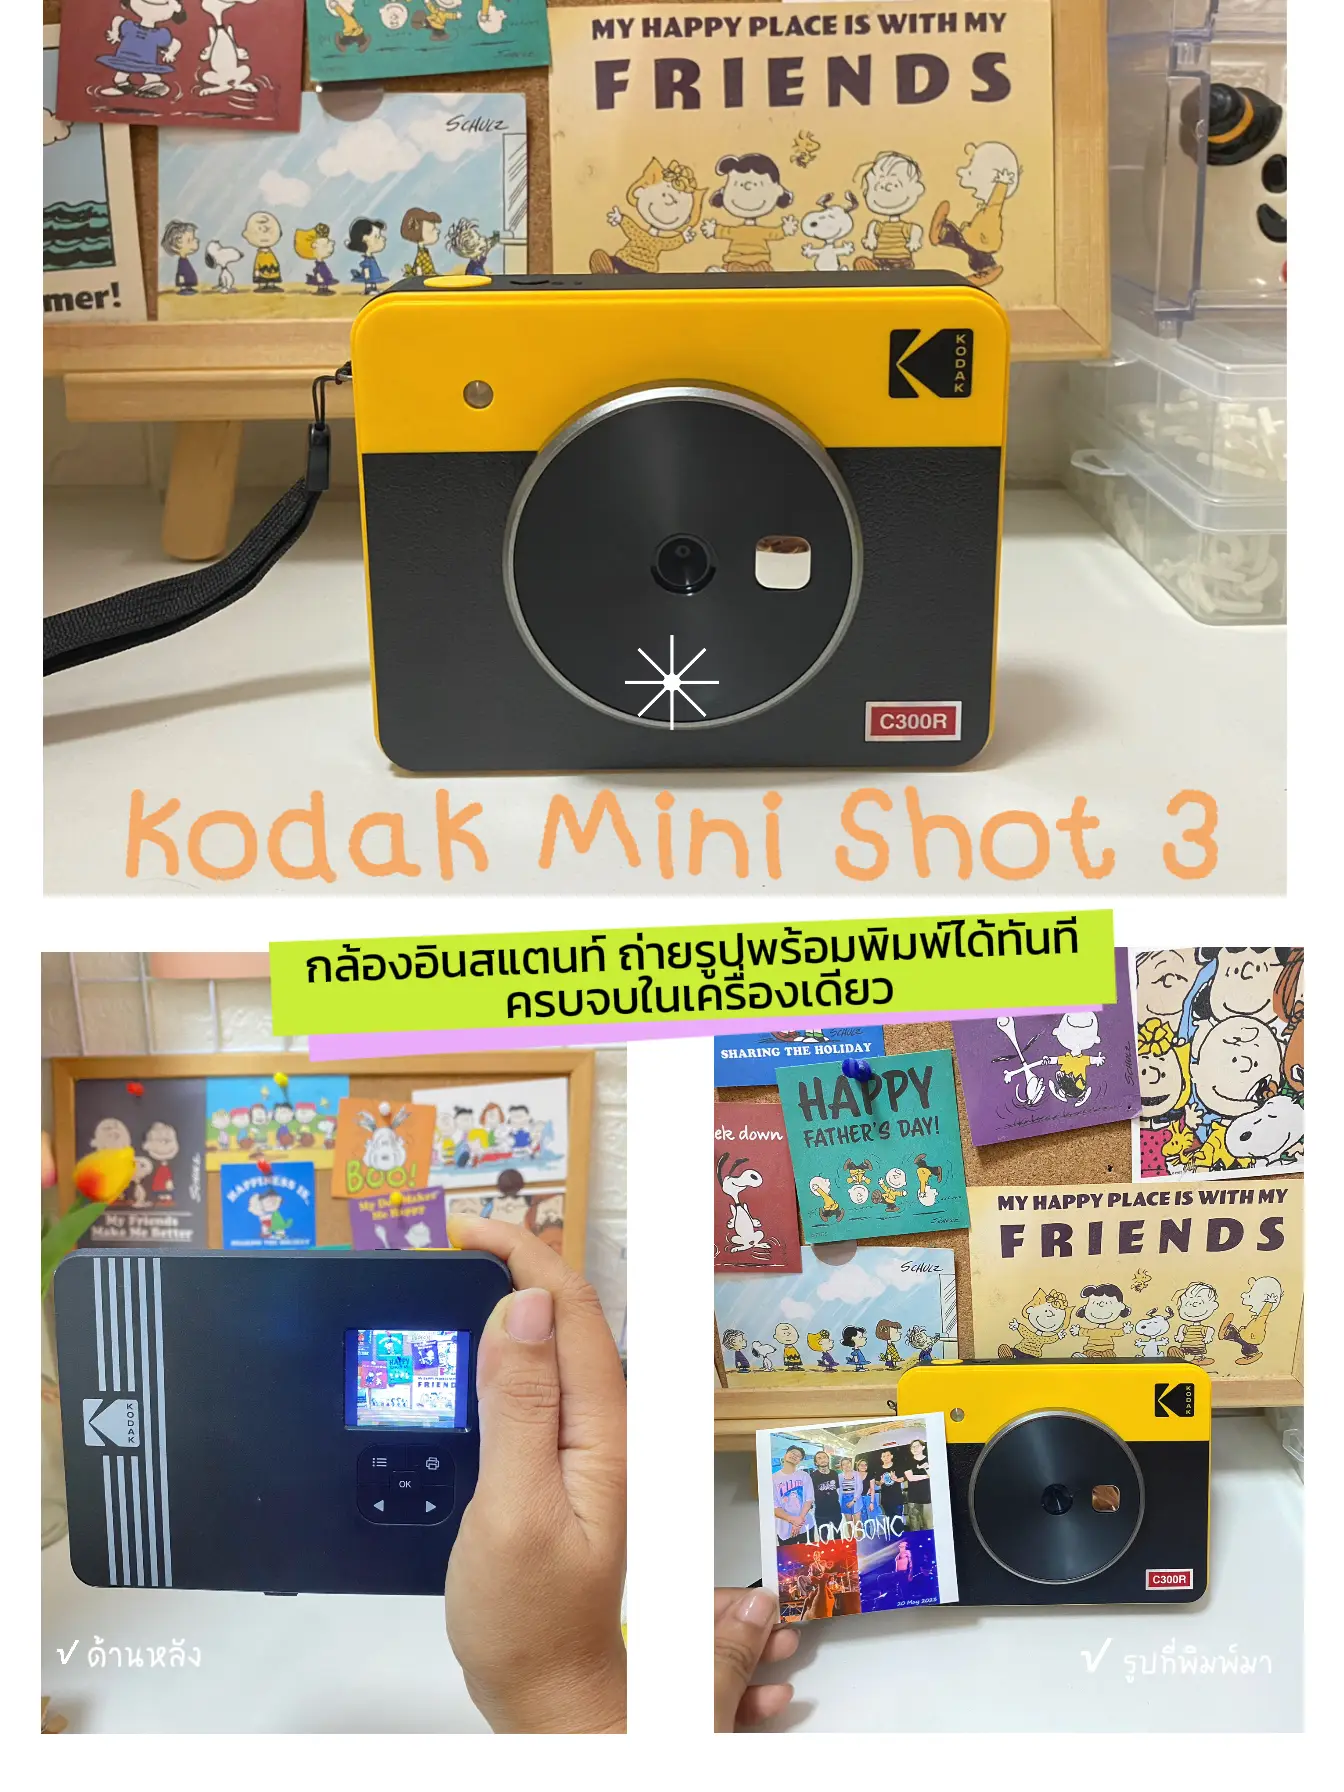 KODAK Mini Shot 3 Instant Camera